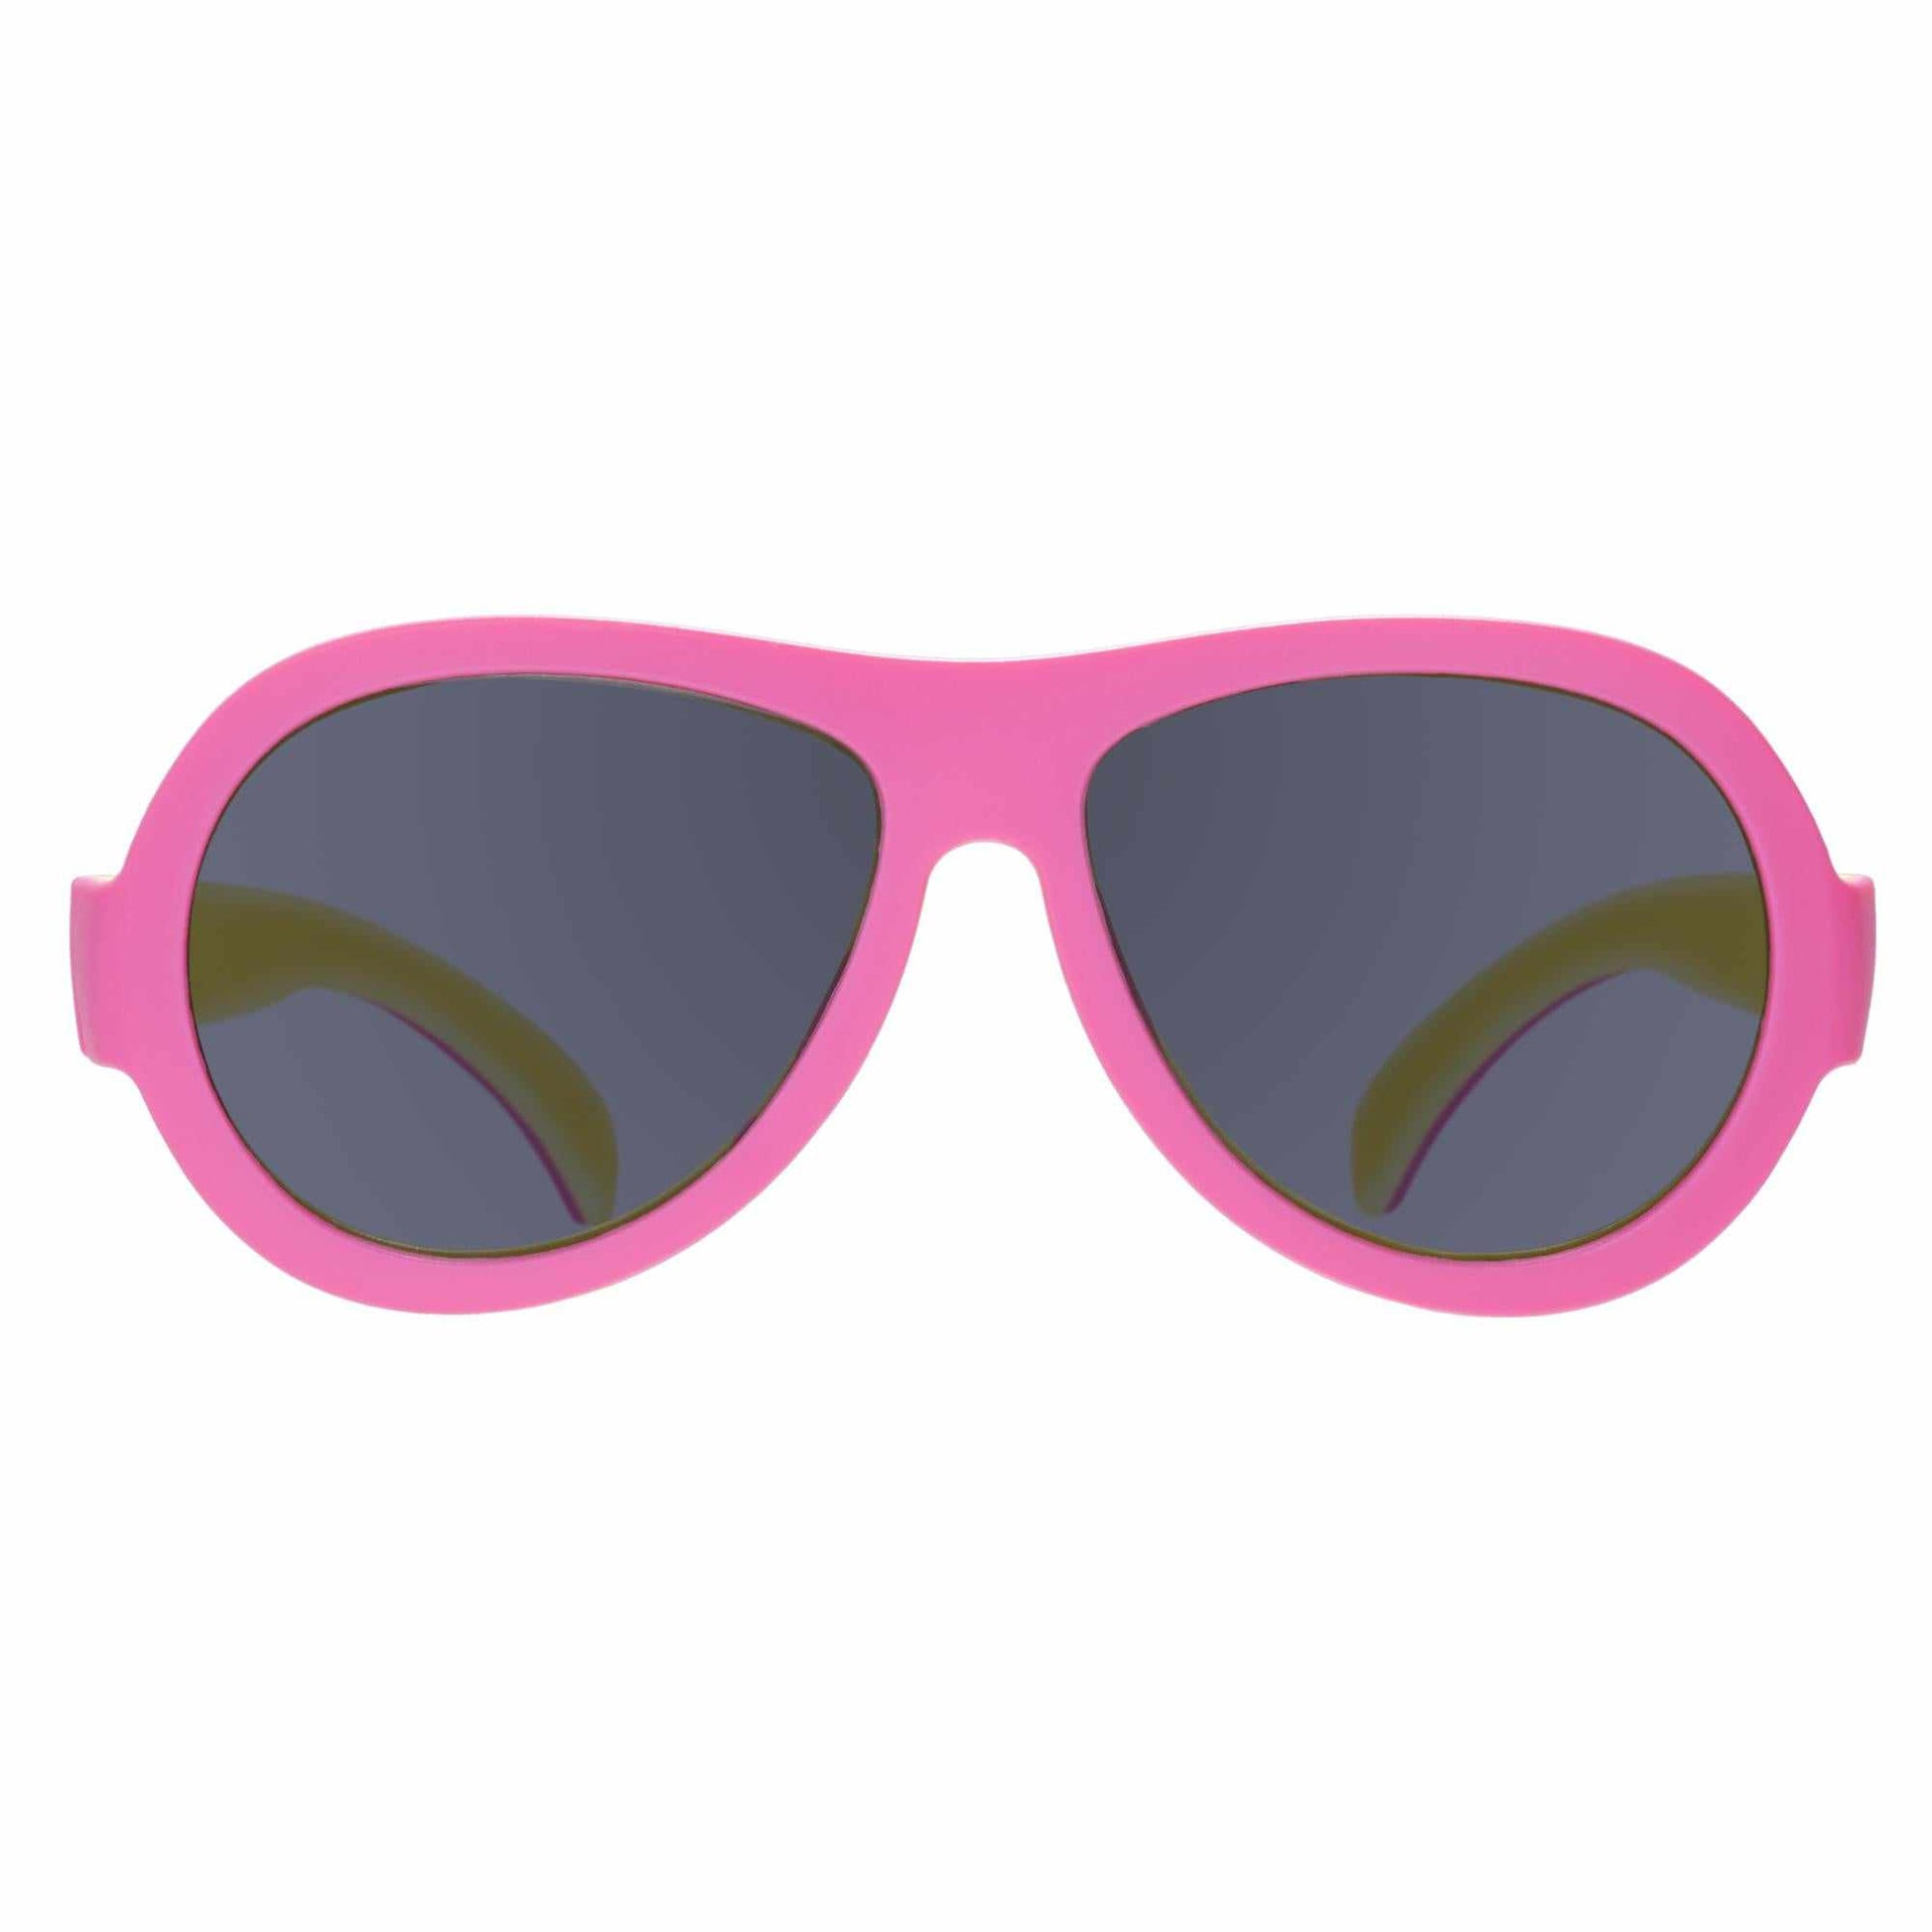 Babiators Sunglasses - Pink Lemonade Aviator